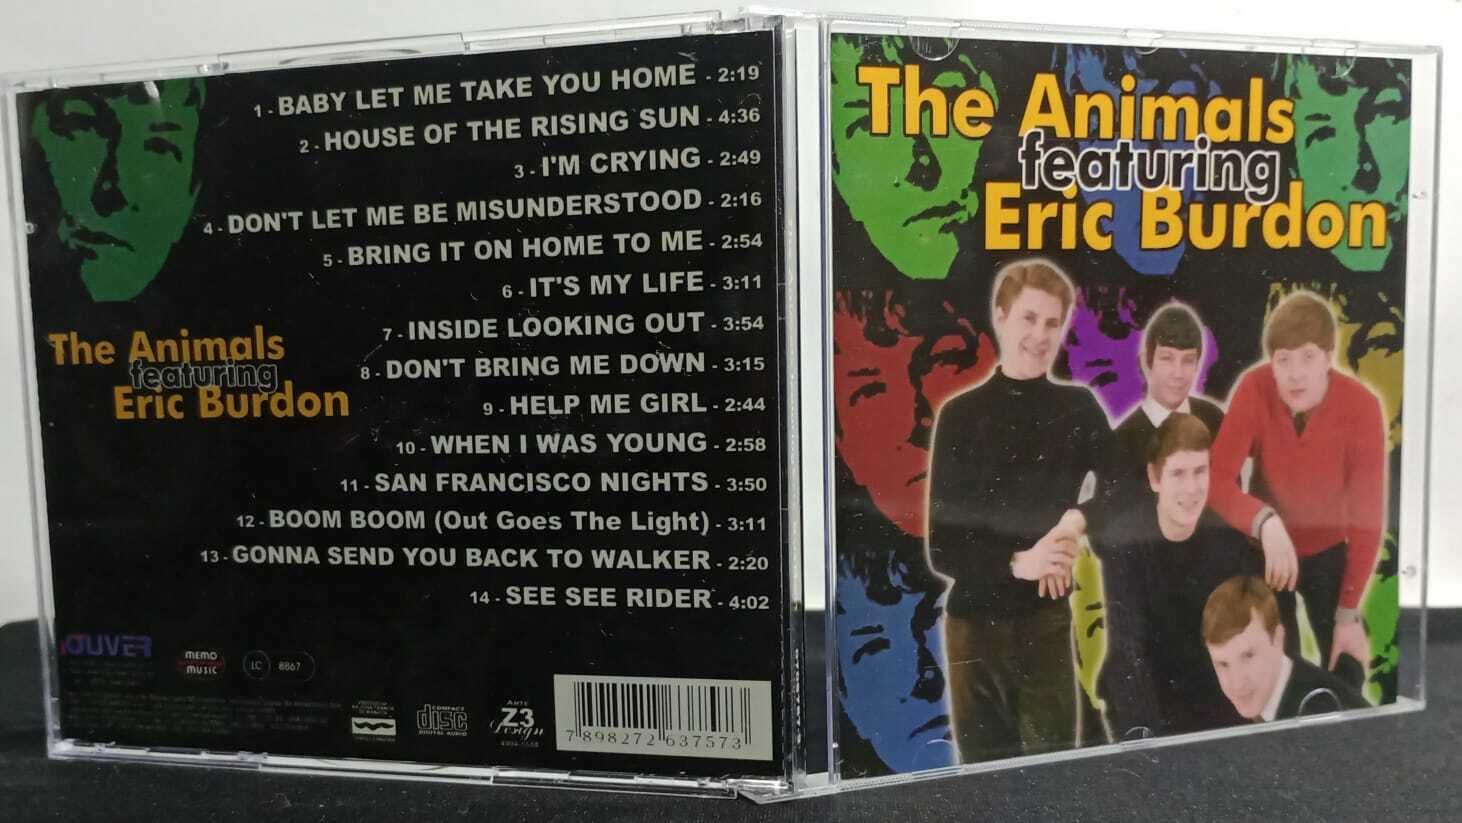 CD - Animals The - Featuring Eric Burdon